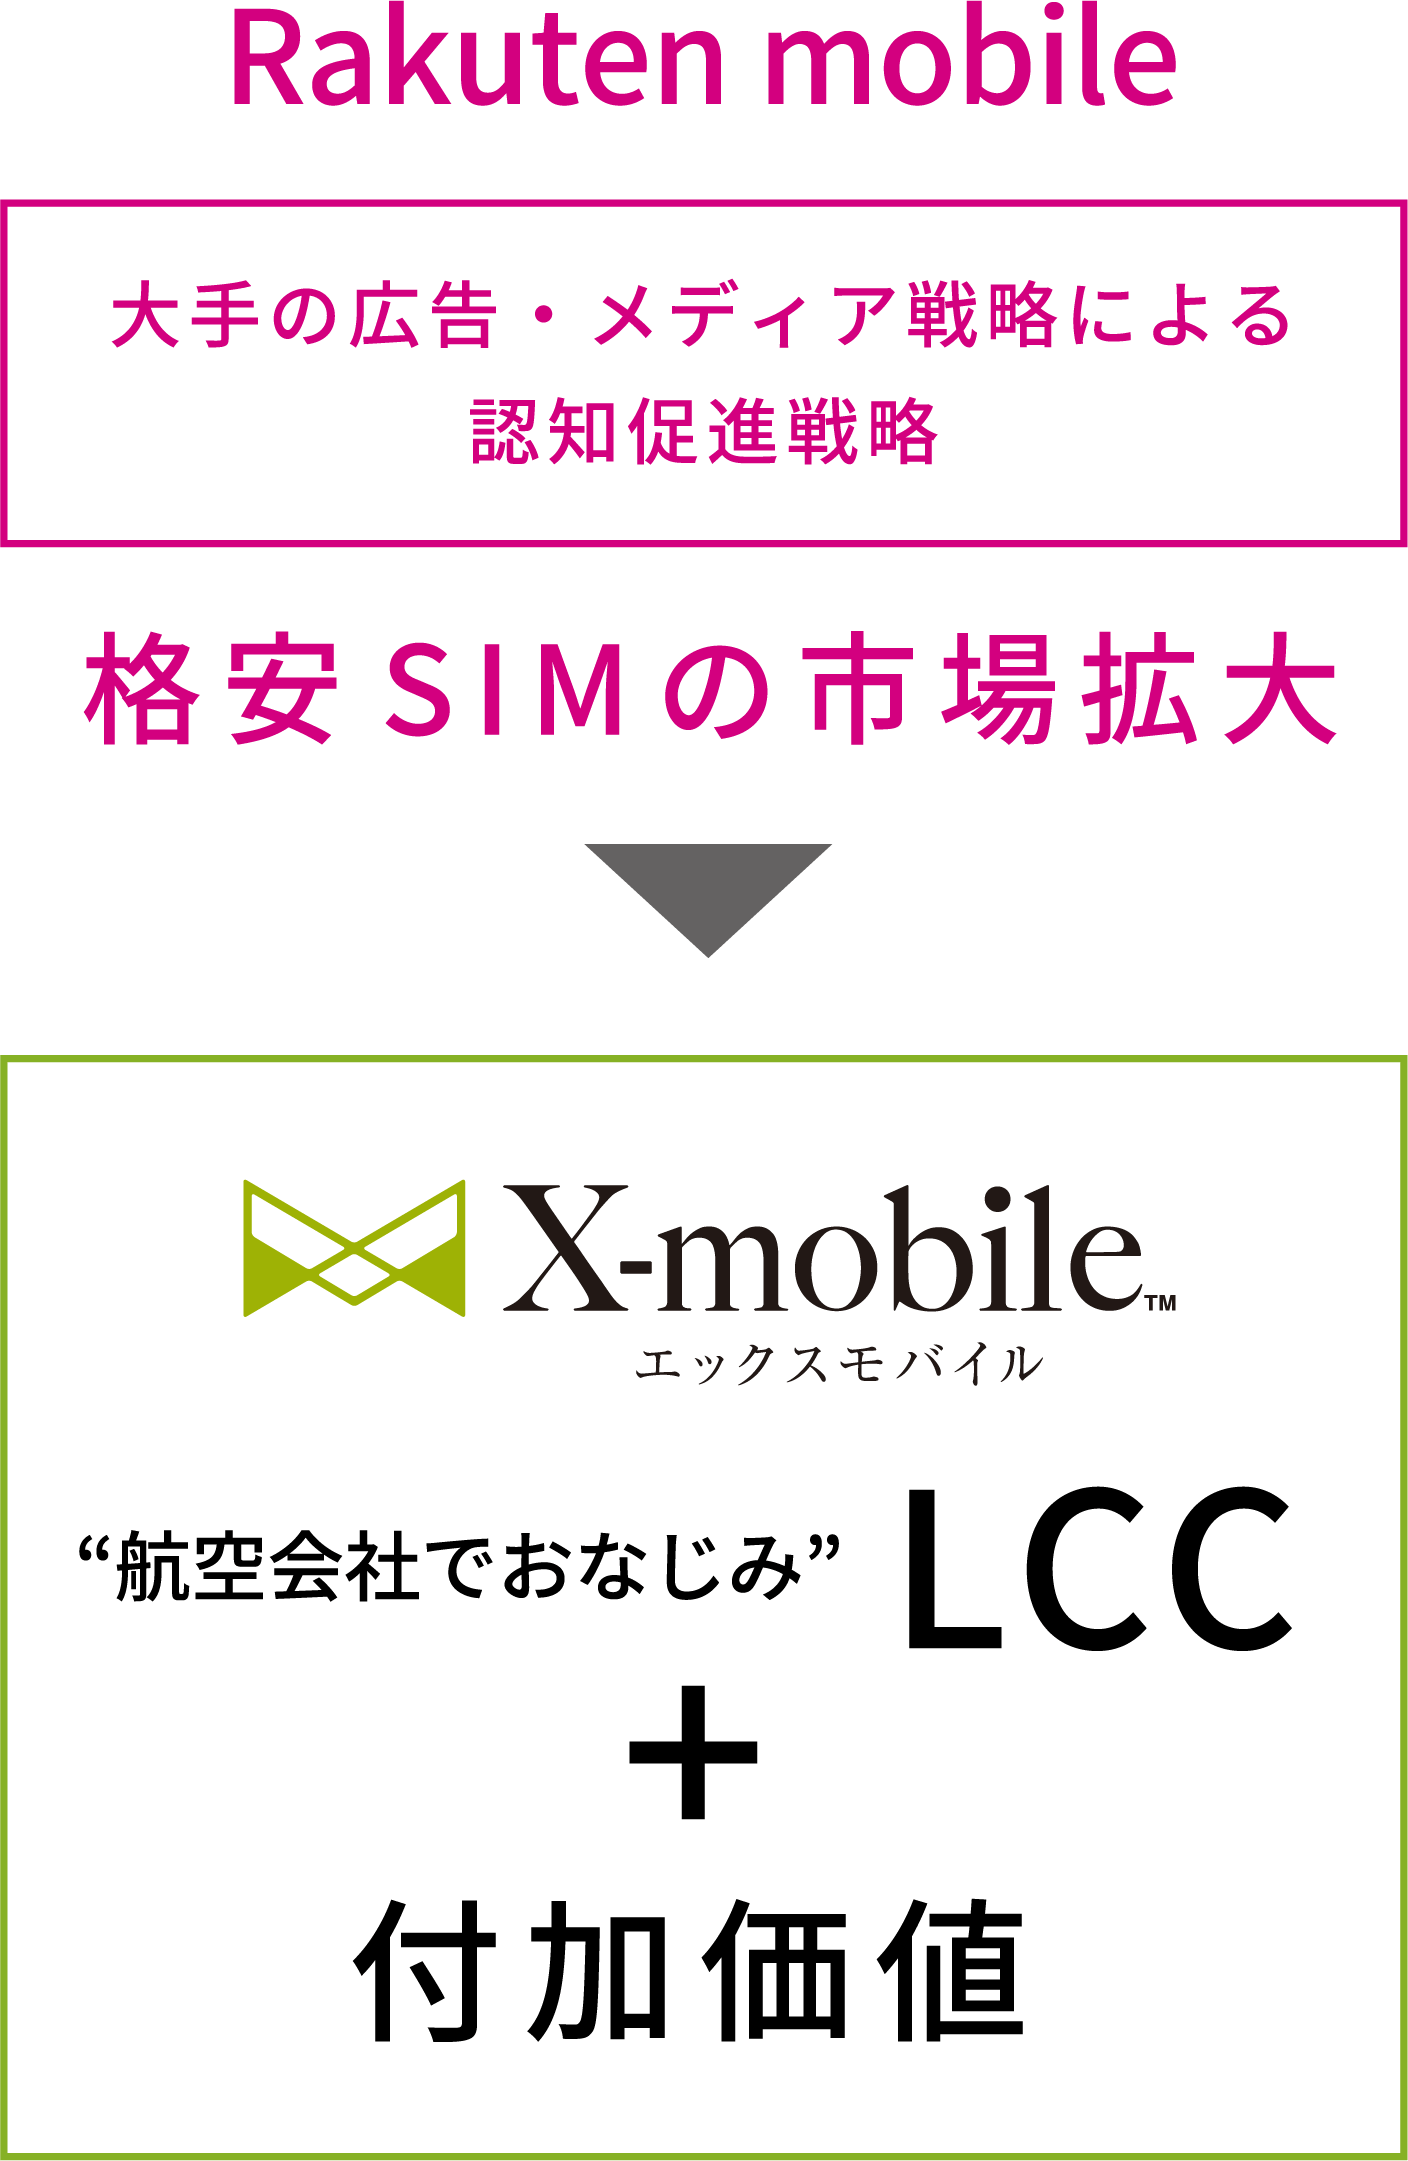 Rakutenmobile 大手の広告・メディア戦略による認知促進戦略 格安SIMの拡大→Xmobile”航空会社でおなじみLCC+付加価値”